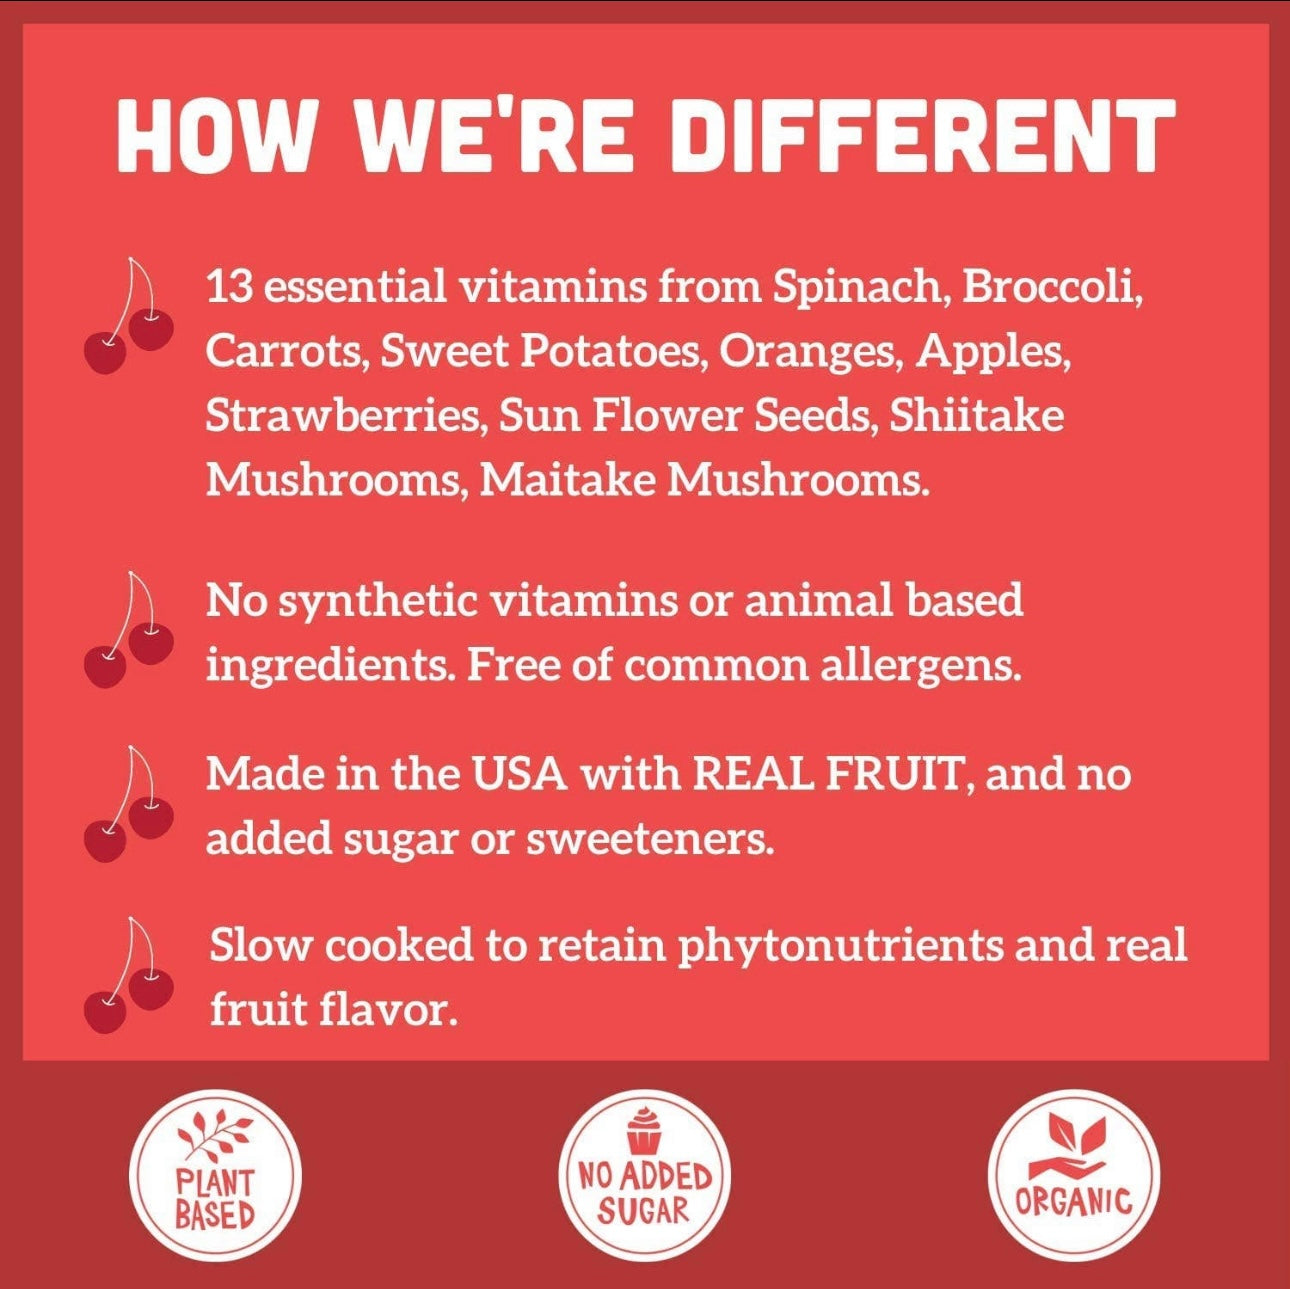 llama naturals  Kids Whole Fruit Multivitamin Gummies - Truth Wellness Co.  – truthwellnessco